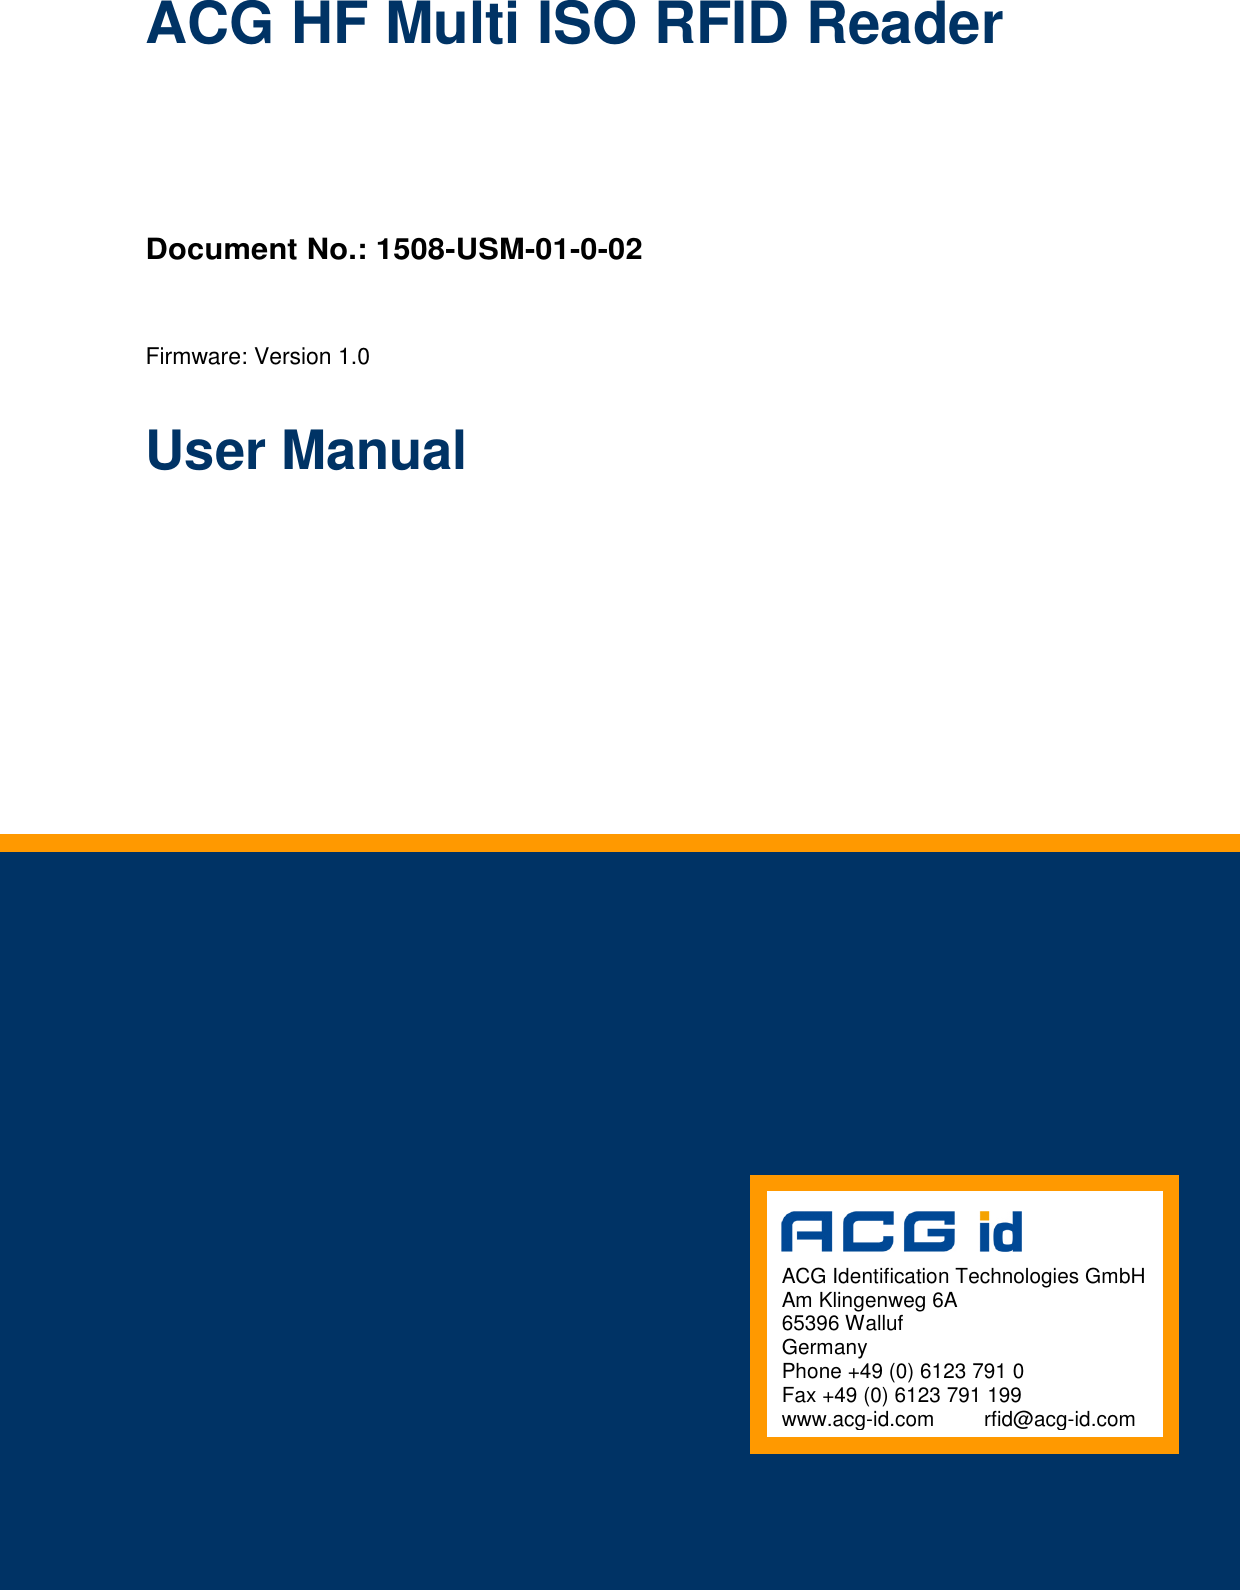 Document Nr.: QSI-040902-OM-1-a-UserManual Dual ISO Module, V2.0             ACG Identification Technologies GmbH Am Klingenweg 6A 65396 Walluf Germany Phone +49 (0) 6123 791 0 Fax +49 (0) 6123 791 199 www.acg-id.com  rfid@acg-id.com ACG HF Multi ISO RFID Reader Document No.: 1508-USM-01-0-02 Firmware: Version 1.0 User Manual  